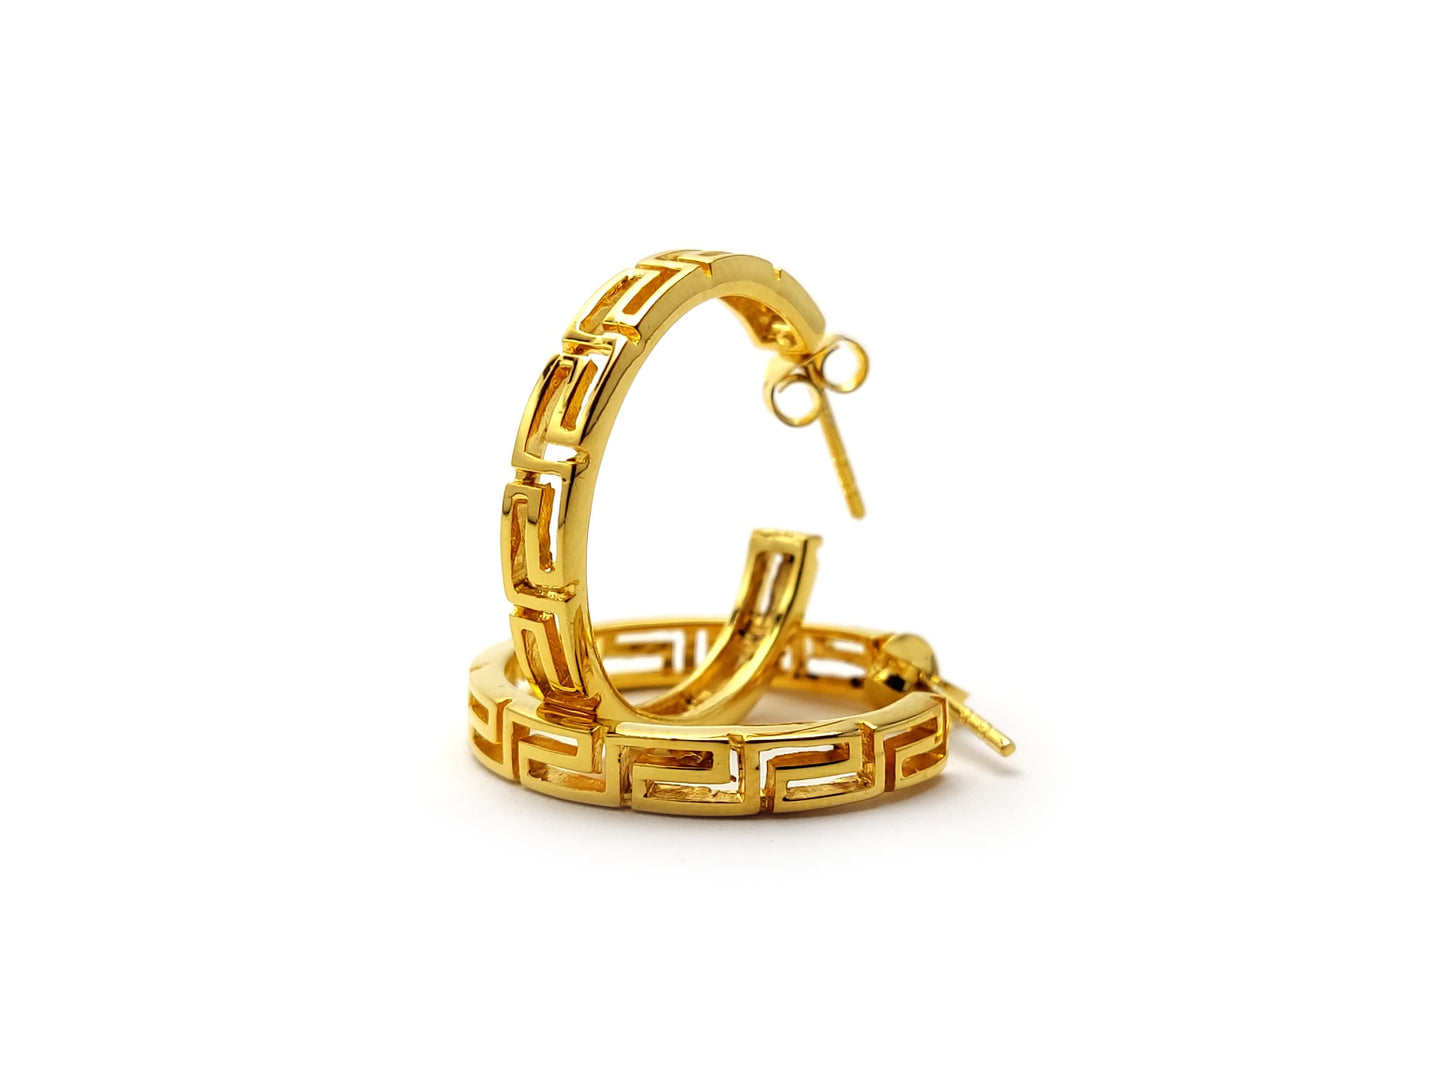 Griechische Ohrringe aus Sterlingsilber 925, griechische Ewigkeitsschlüssel, vergoldete Creolen, 30 mm, griechische Ohrringe, Boucles d'oreilles grecques